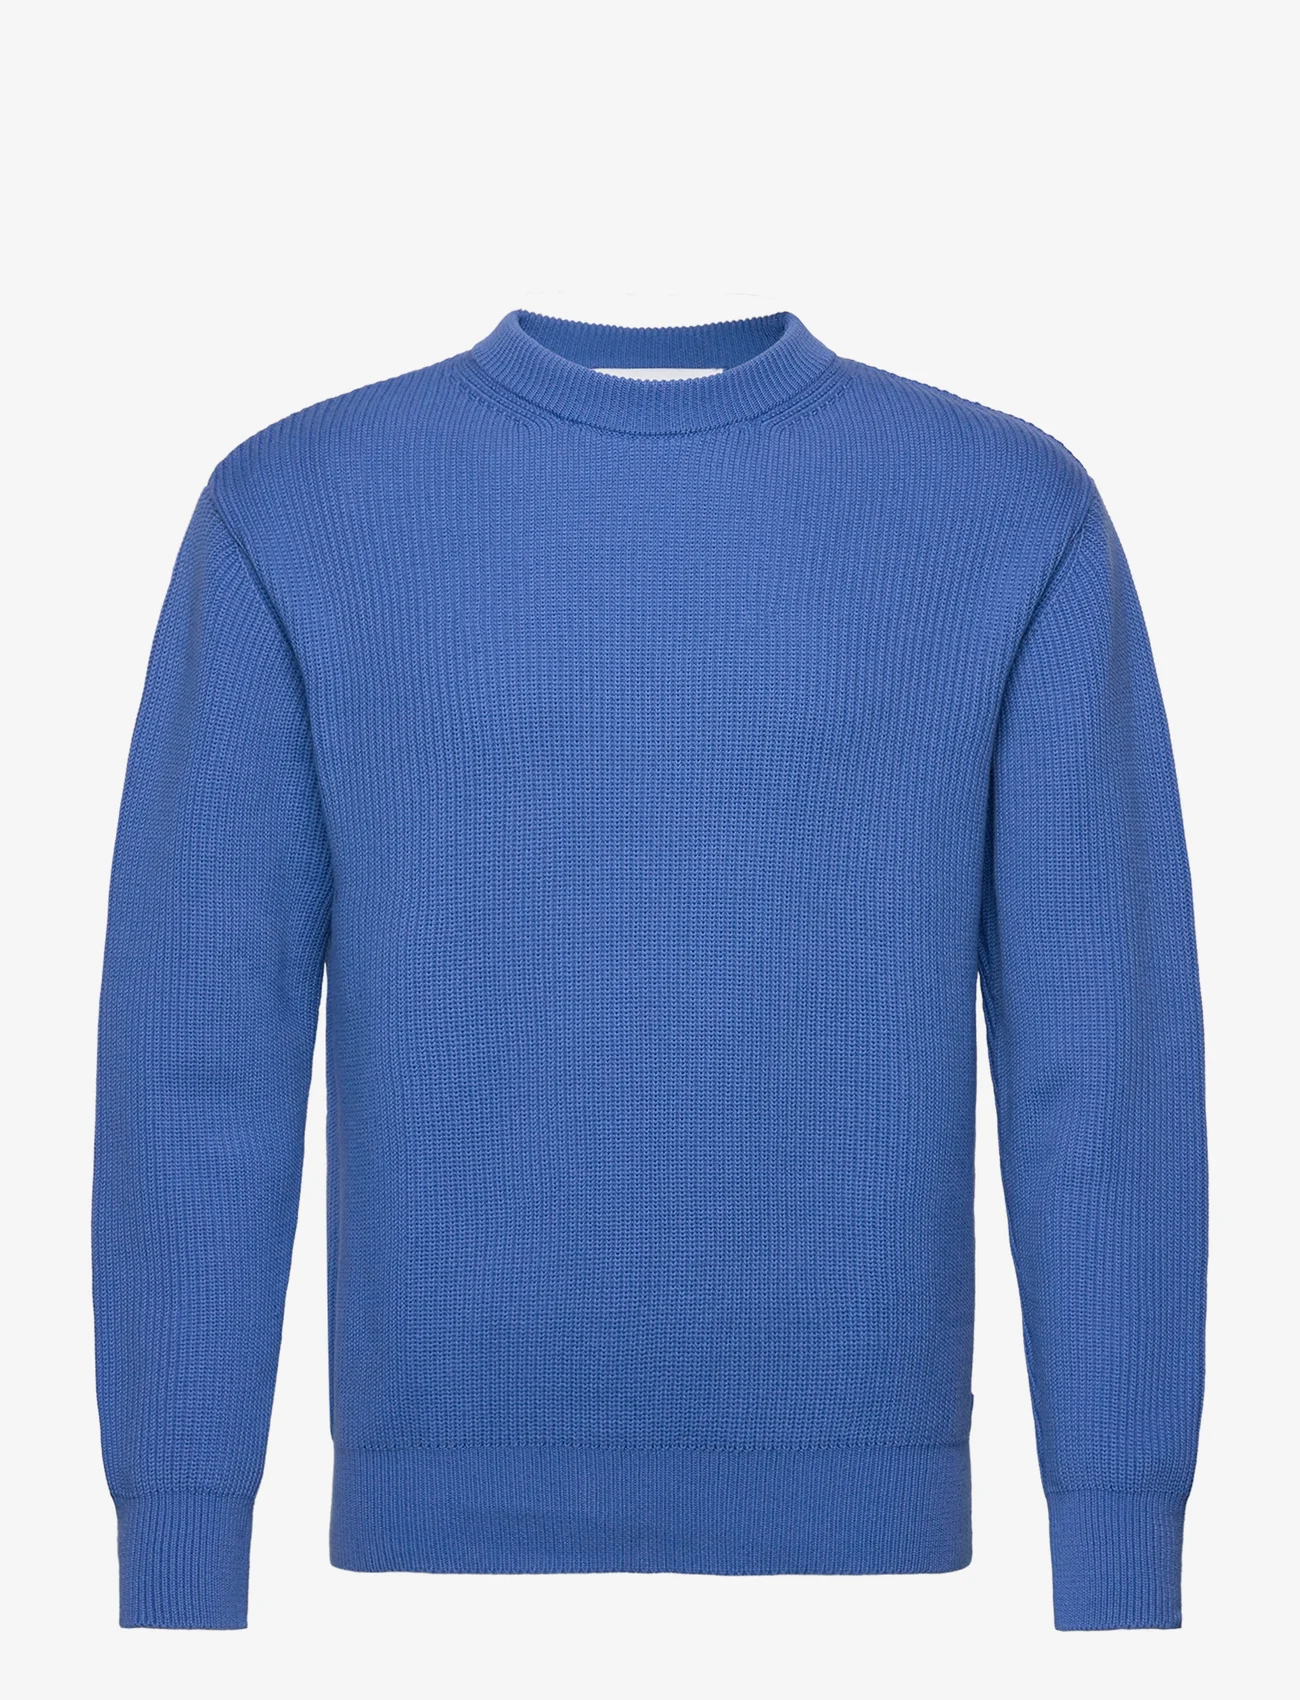 Garment Project - Round Neck Knit - Blue - truien met ronde hals - blue - 0